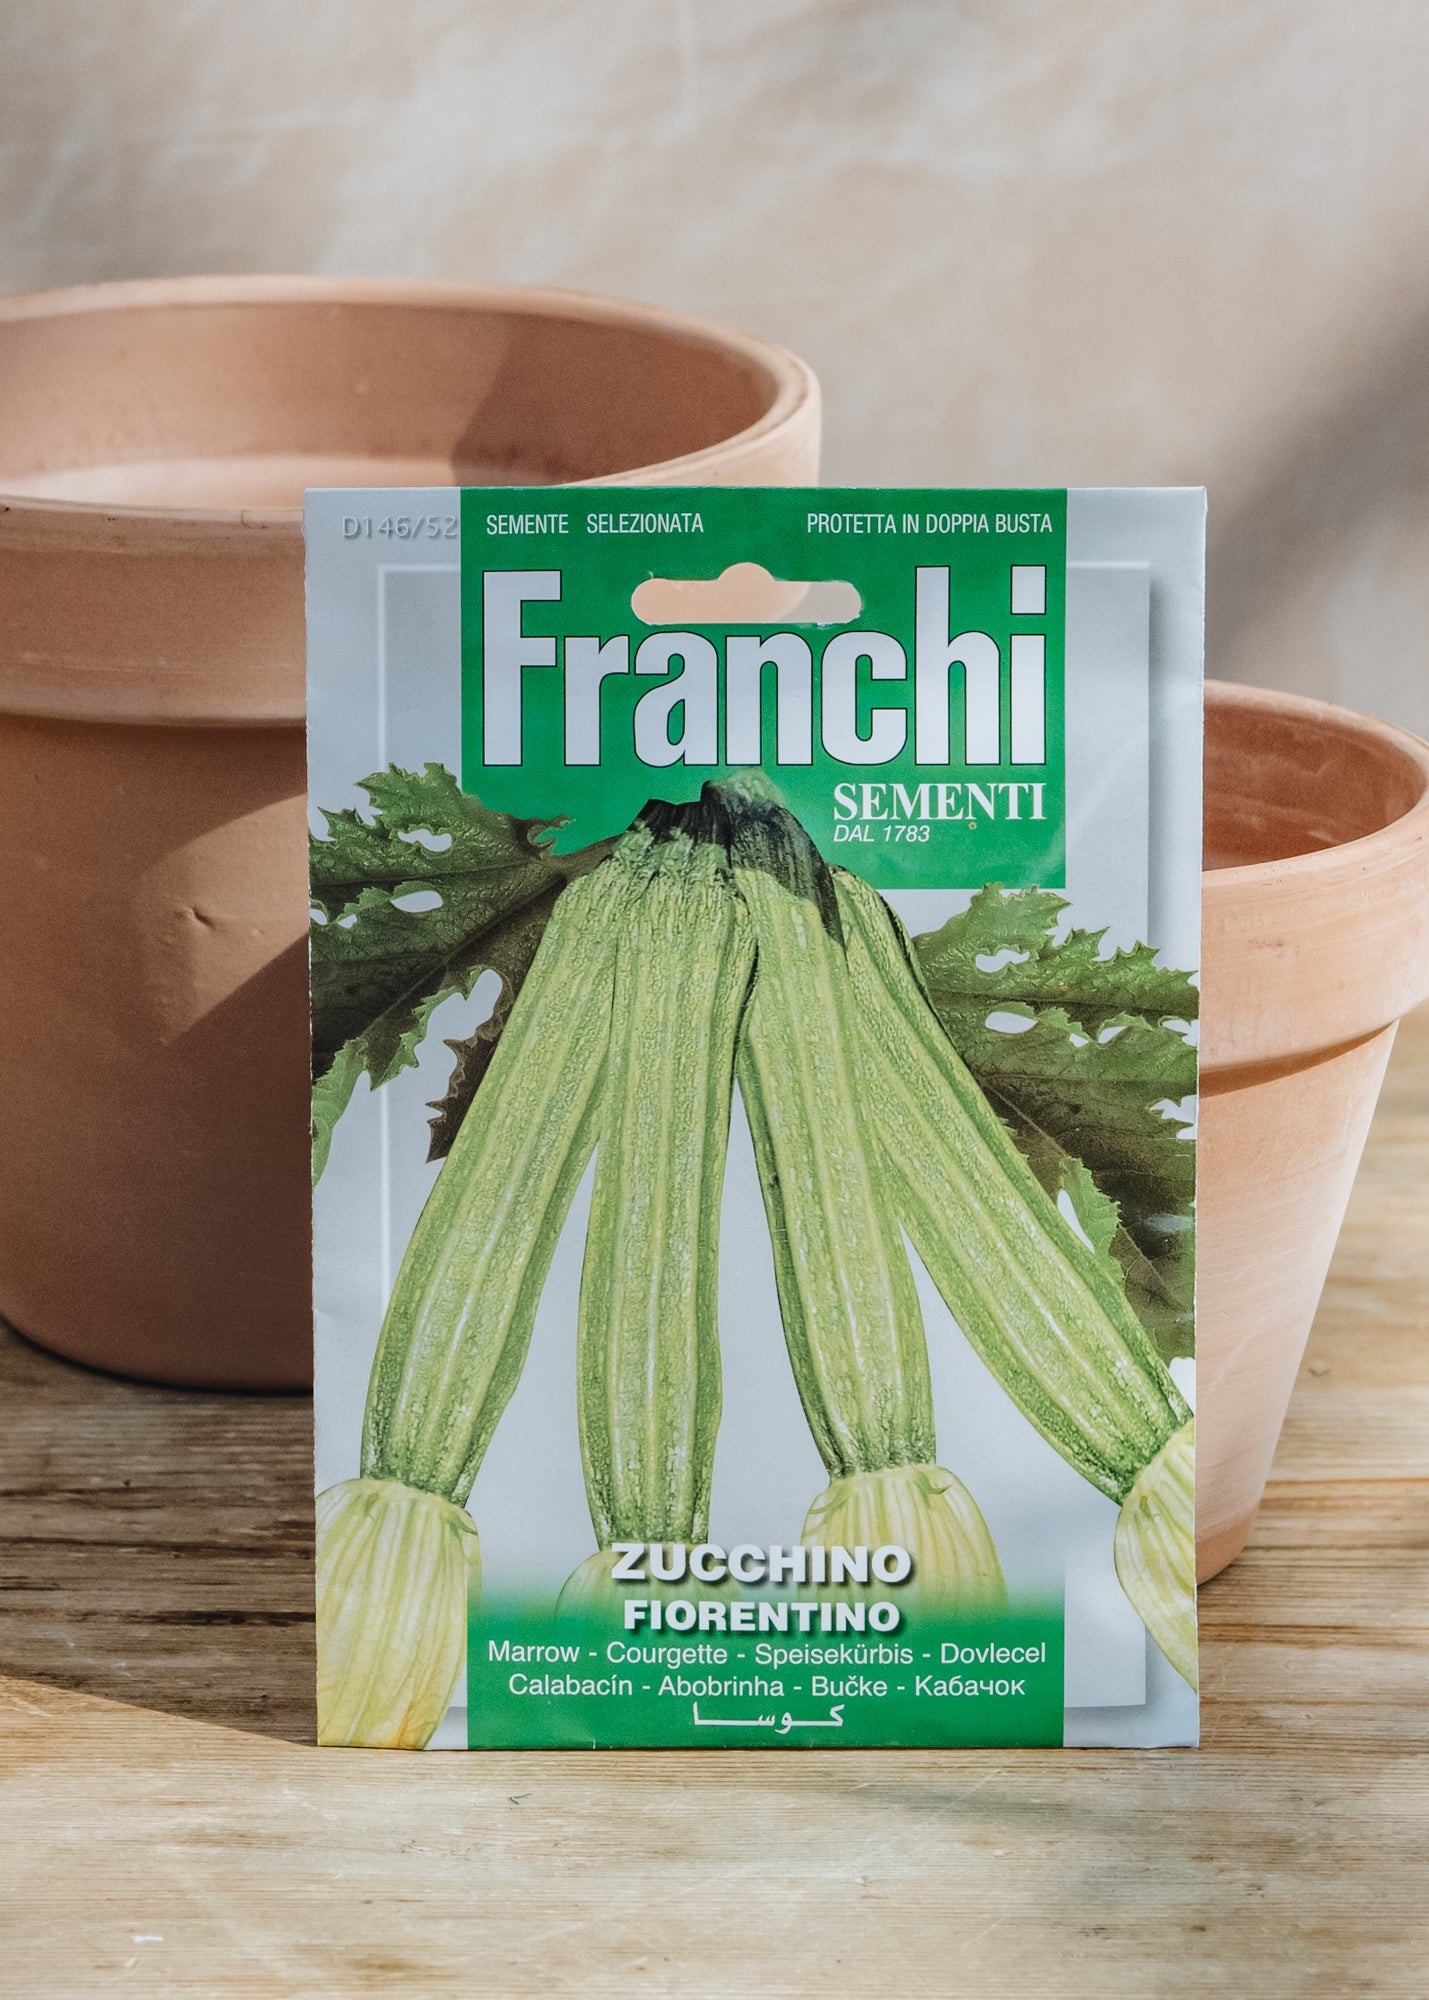 Franchi Courgette 'Lungo Fiorentino' Seeds